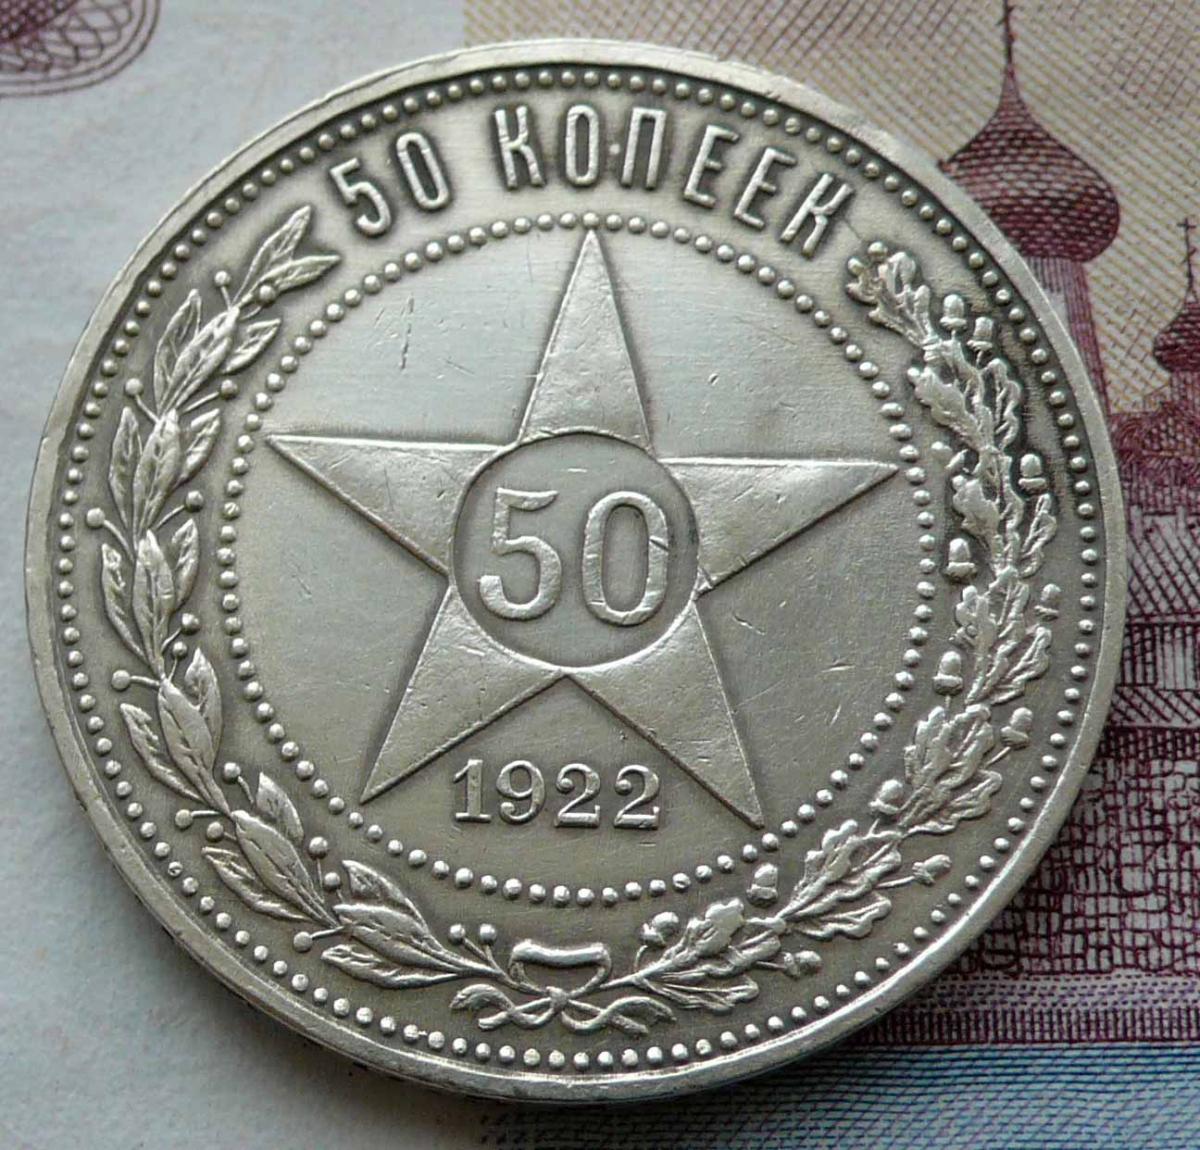 50 копеек 1922 года серебро. 50 Копеек 1922 серебро. Монеты 1922 50 копеек серебро. Монета 50 копеек 1922 года серебро. Серебряная монета 50 копеек 1922.